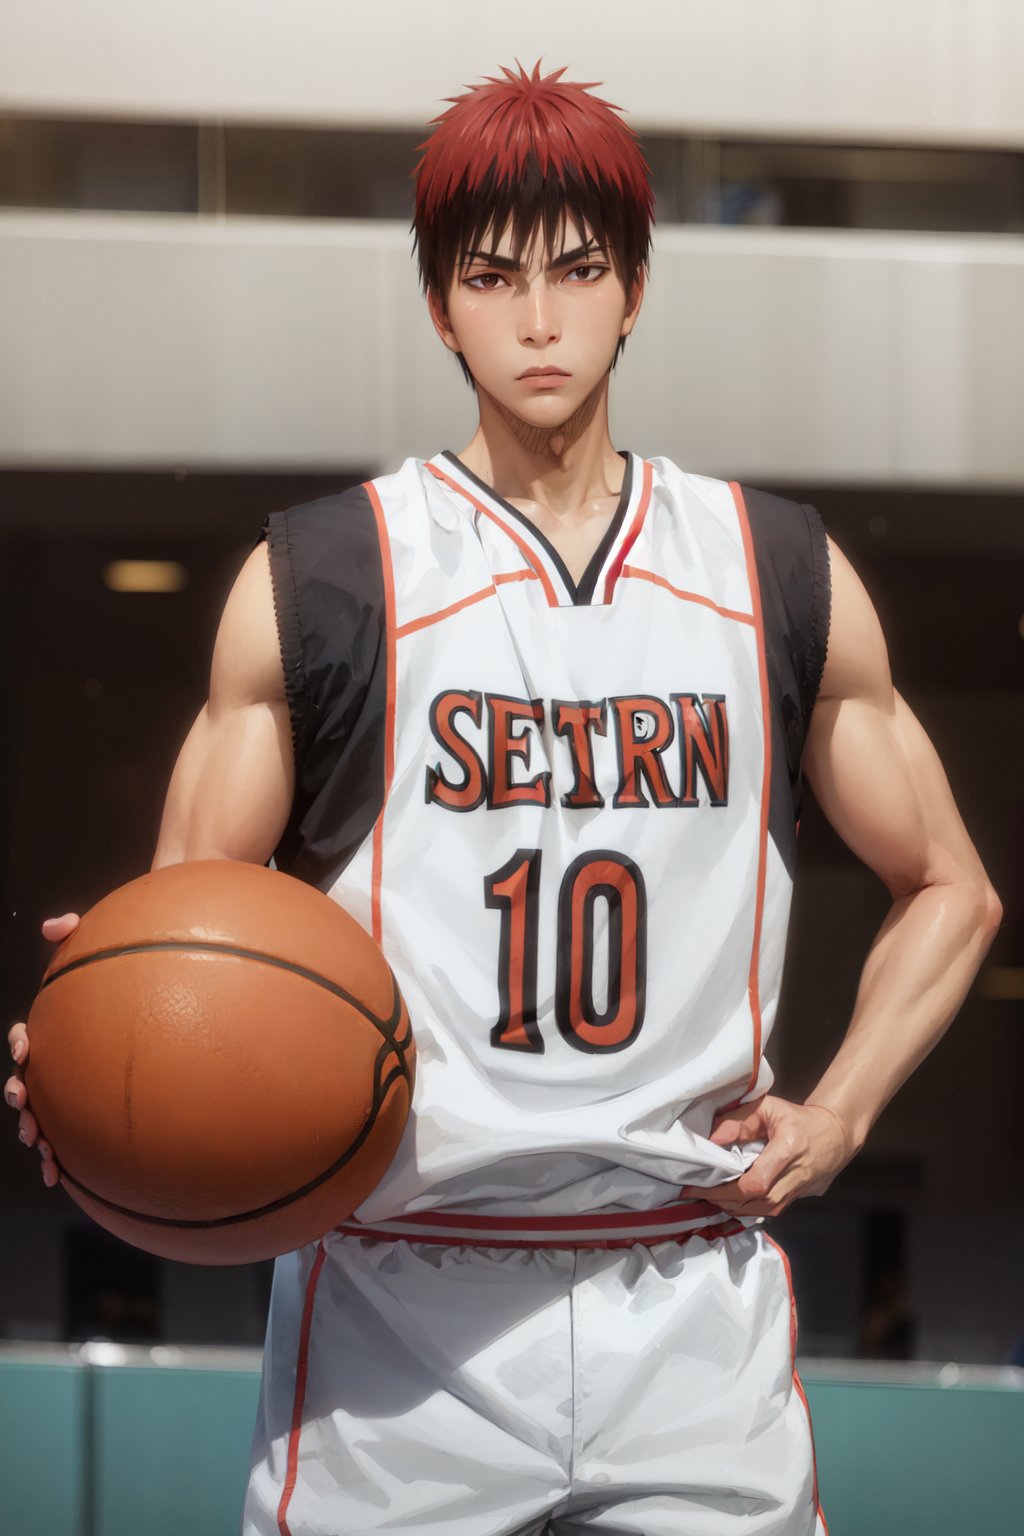 Taiga Kagami | Kuroko's Basketball image by justTNP